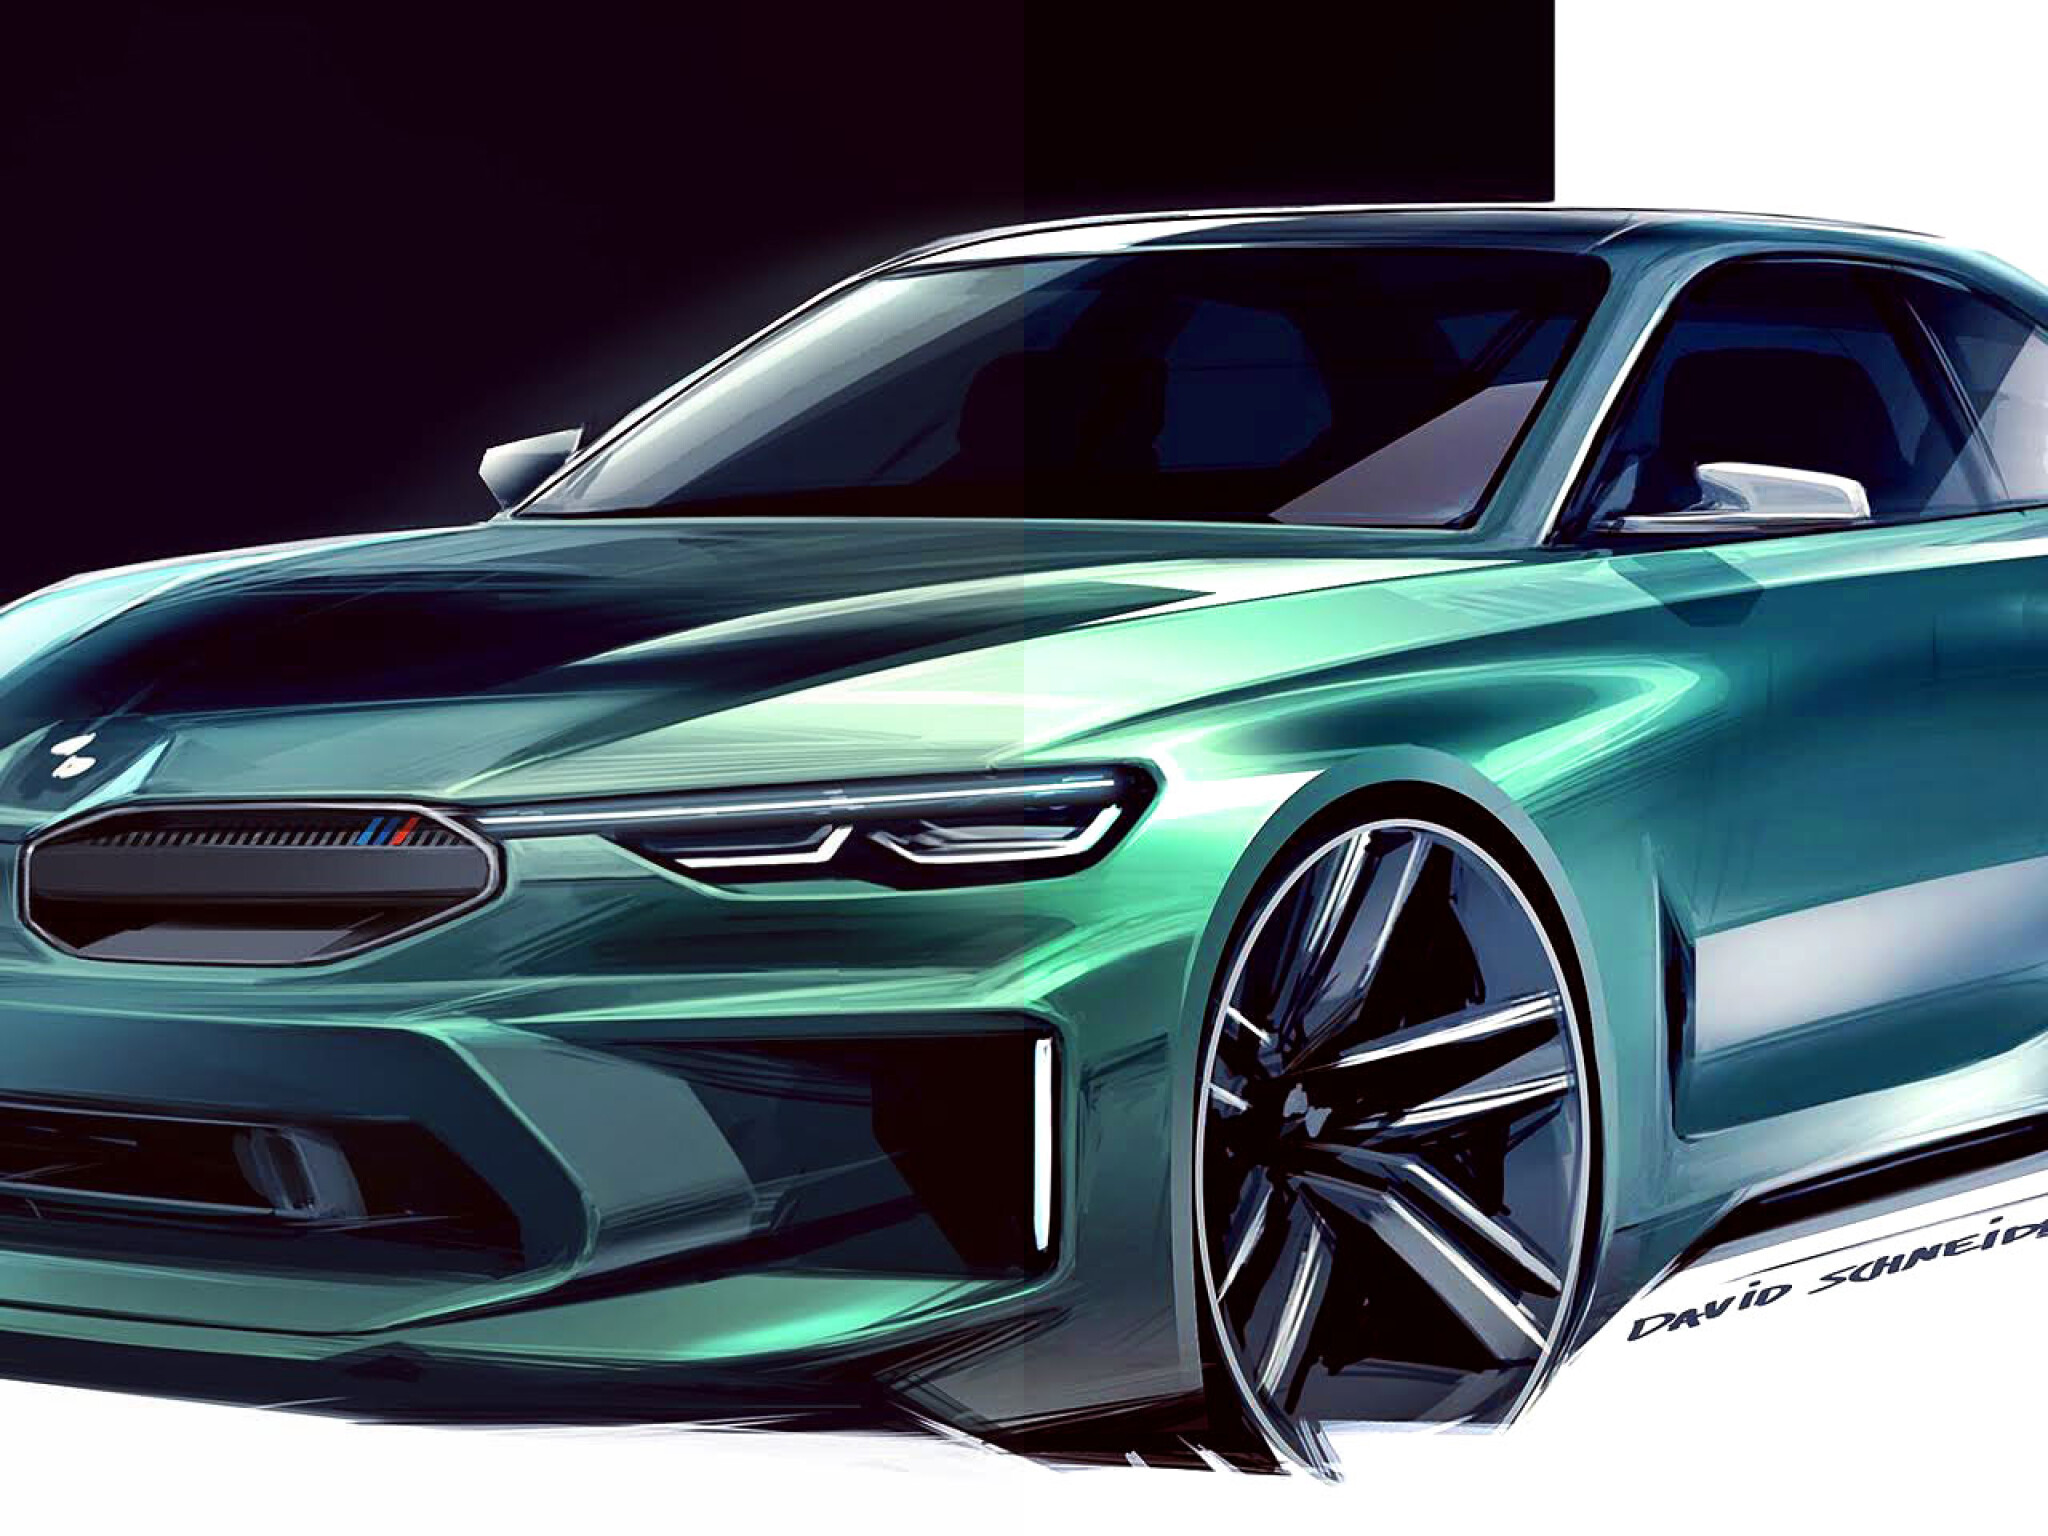 Buick luxury sedan design sketch would make a great flagship - Autoblog